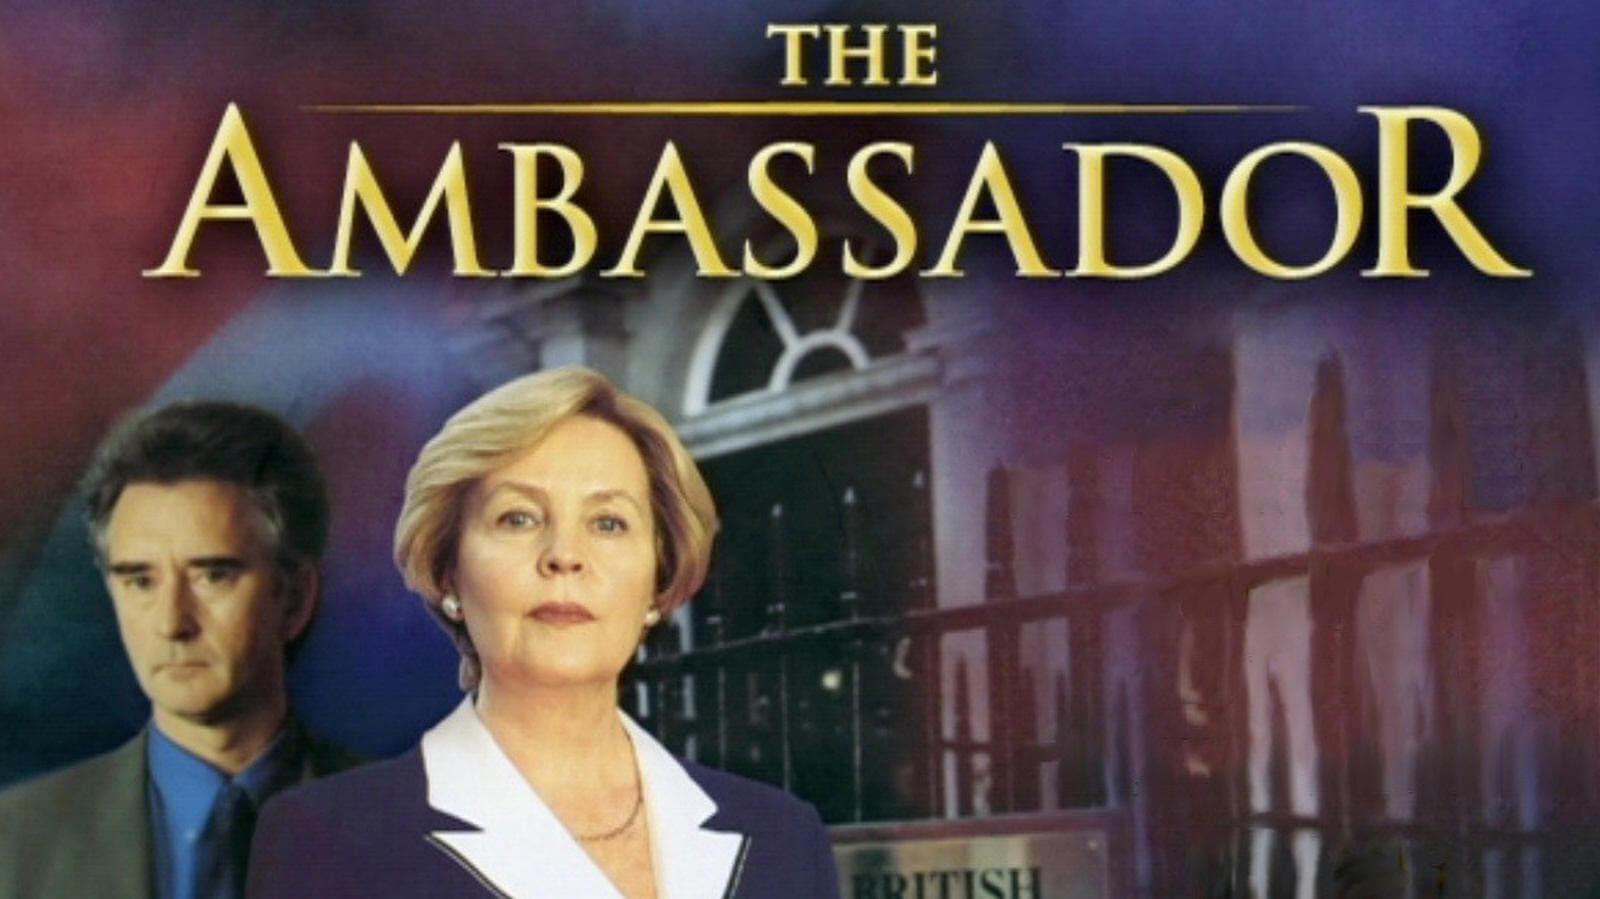 The Ambassador backdrop